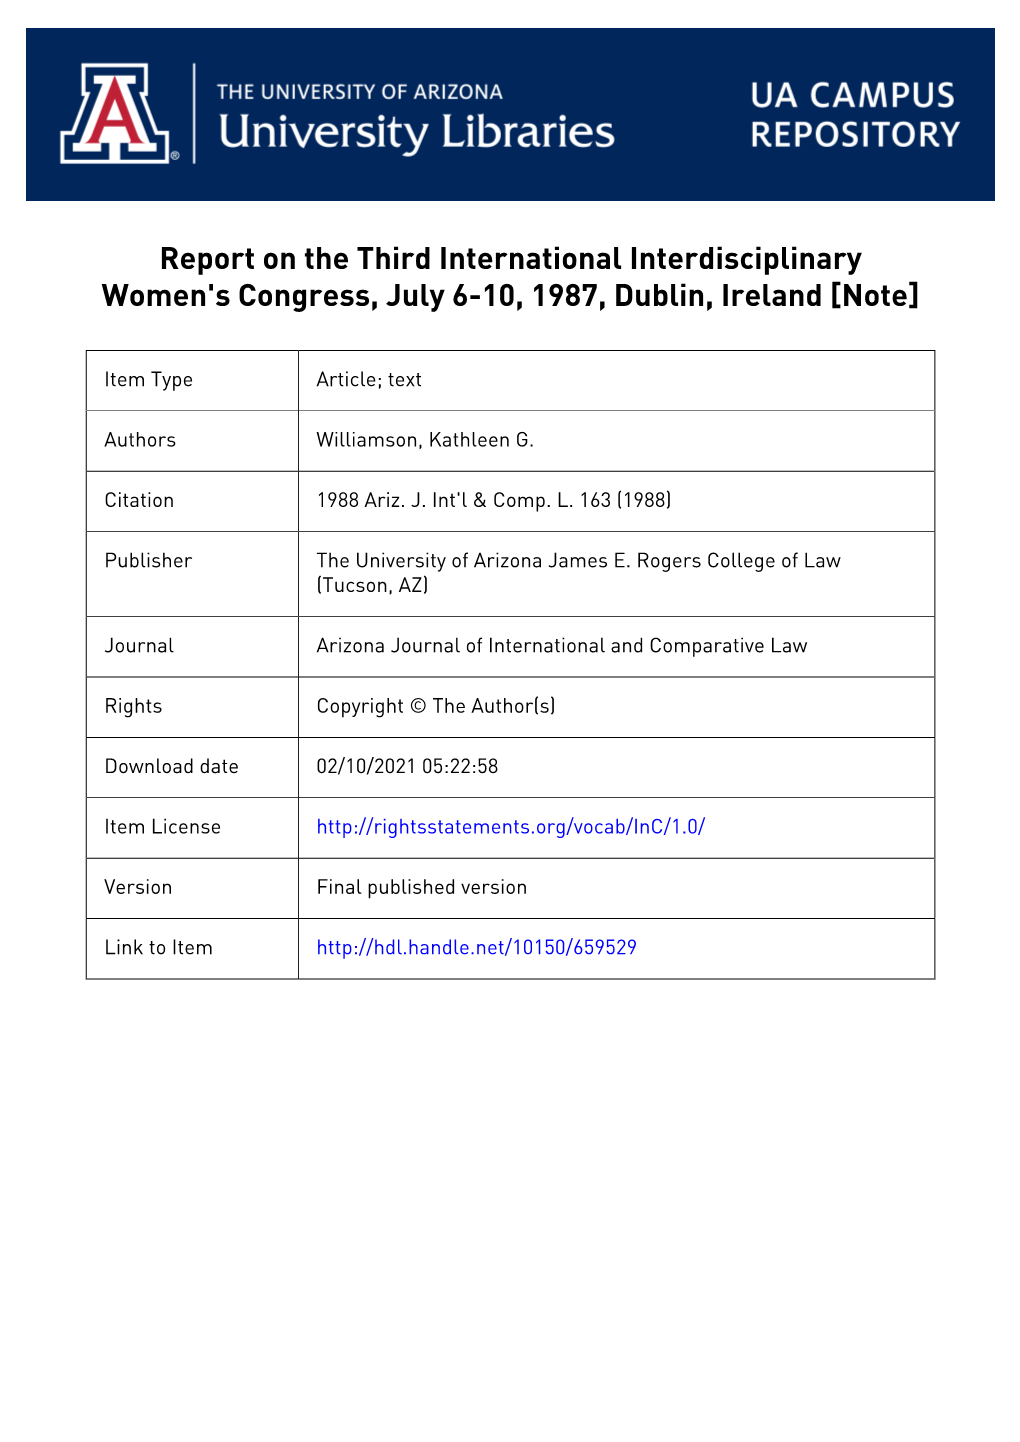 Report on the Third International Interdisciplinary Women's Congress, July 6-10, 1987, Dublin, Ireland [Note]